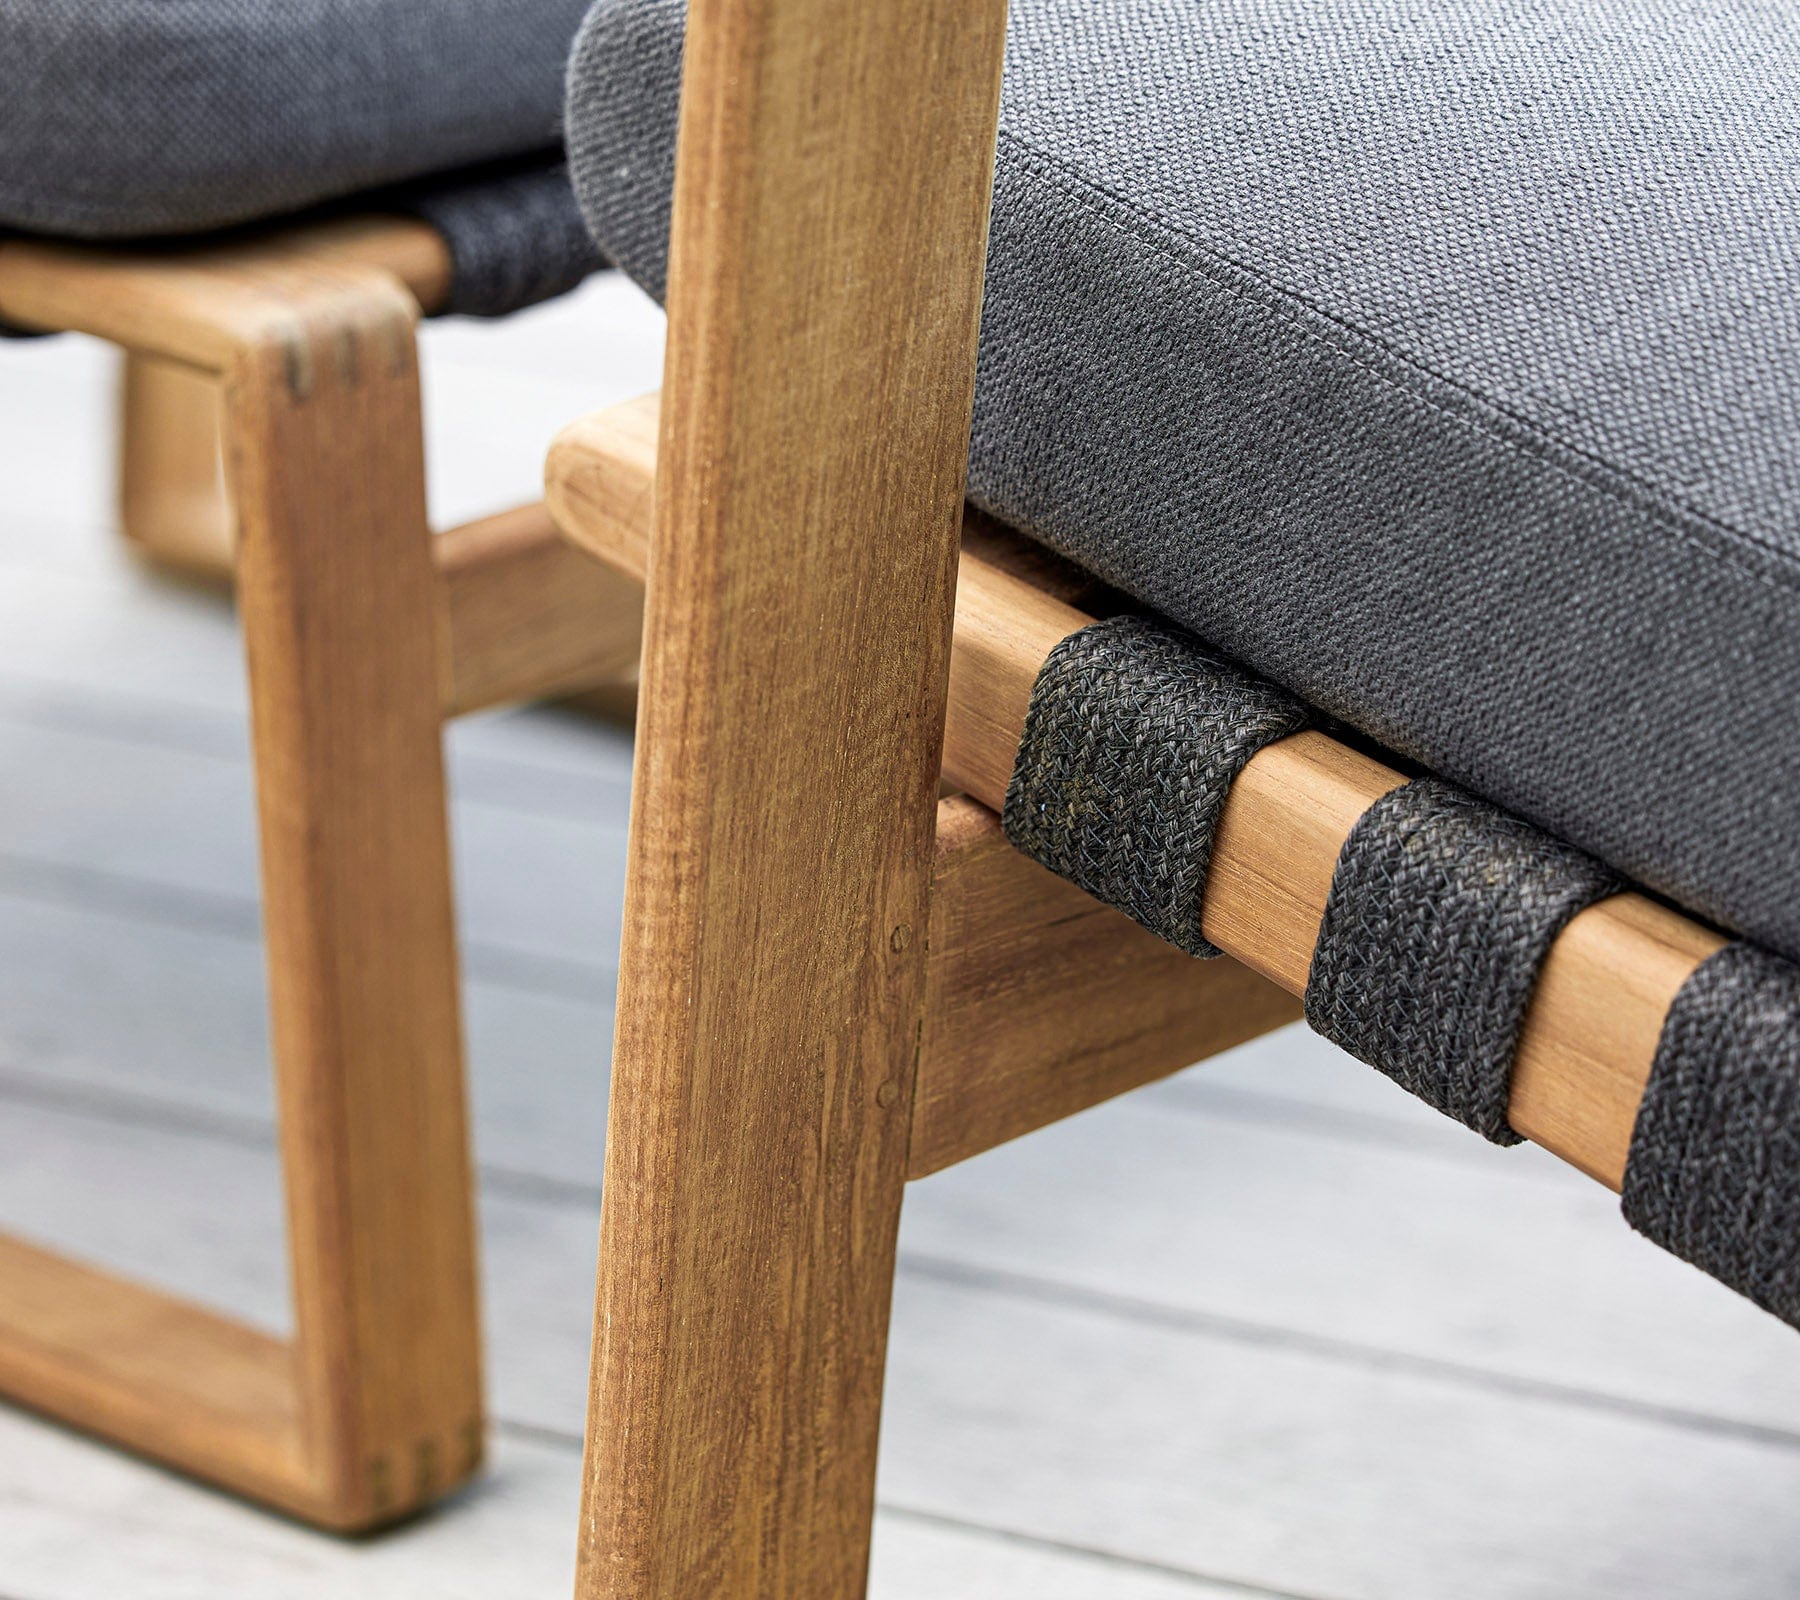 Cane-Line - Endless Soft highback chair incl. grey Airtouch cushion set - Teak | 54503TAITG